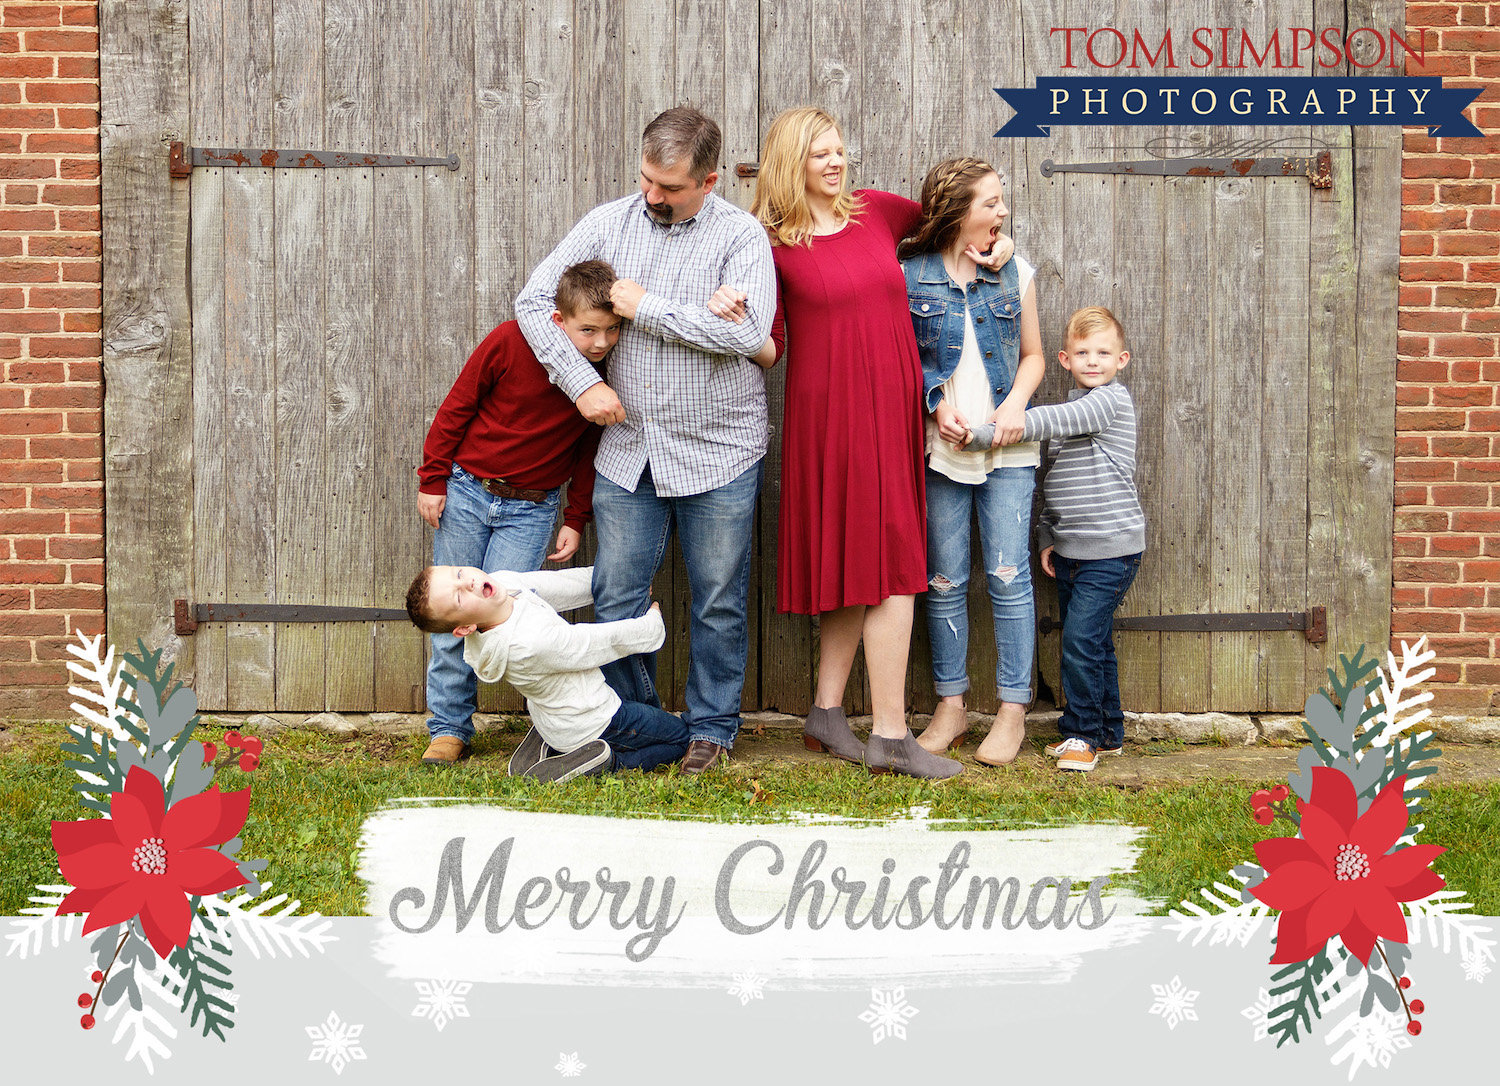 Do You Send Family Photo Christmas Cards? » Tom Simpson Photography